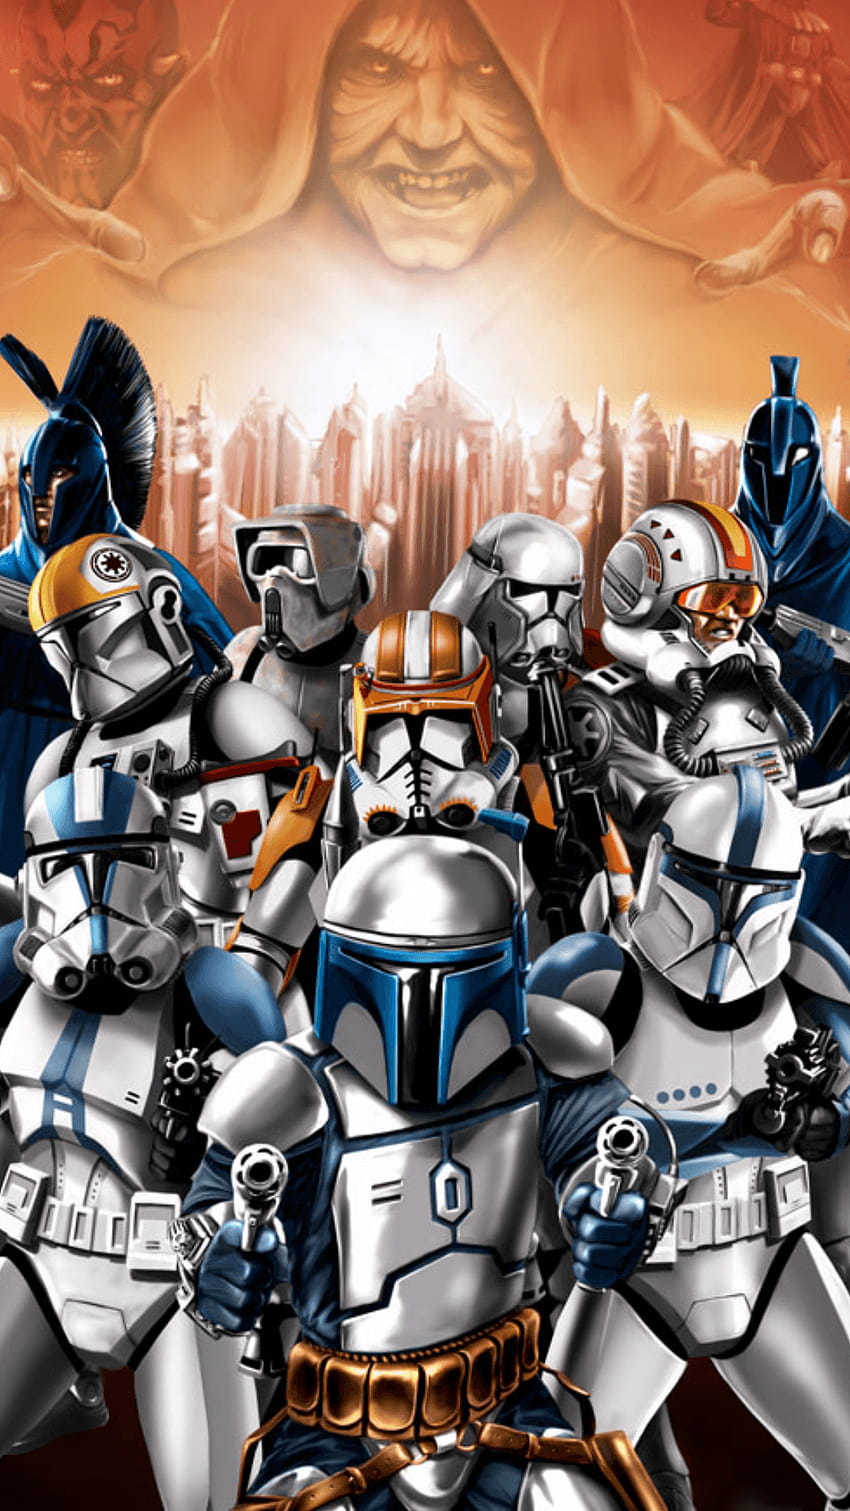 Wallpaper Stormtrooper Kyle Wright Stormtrooper Star Wars 501st Legion  Darth Vader Background  Download Free Image